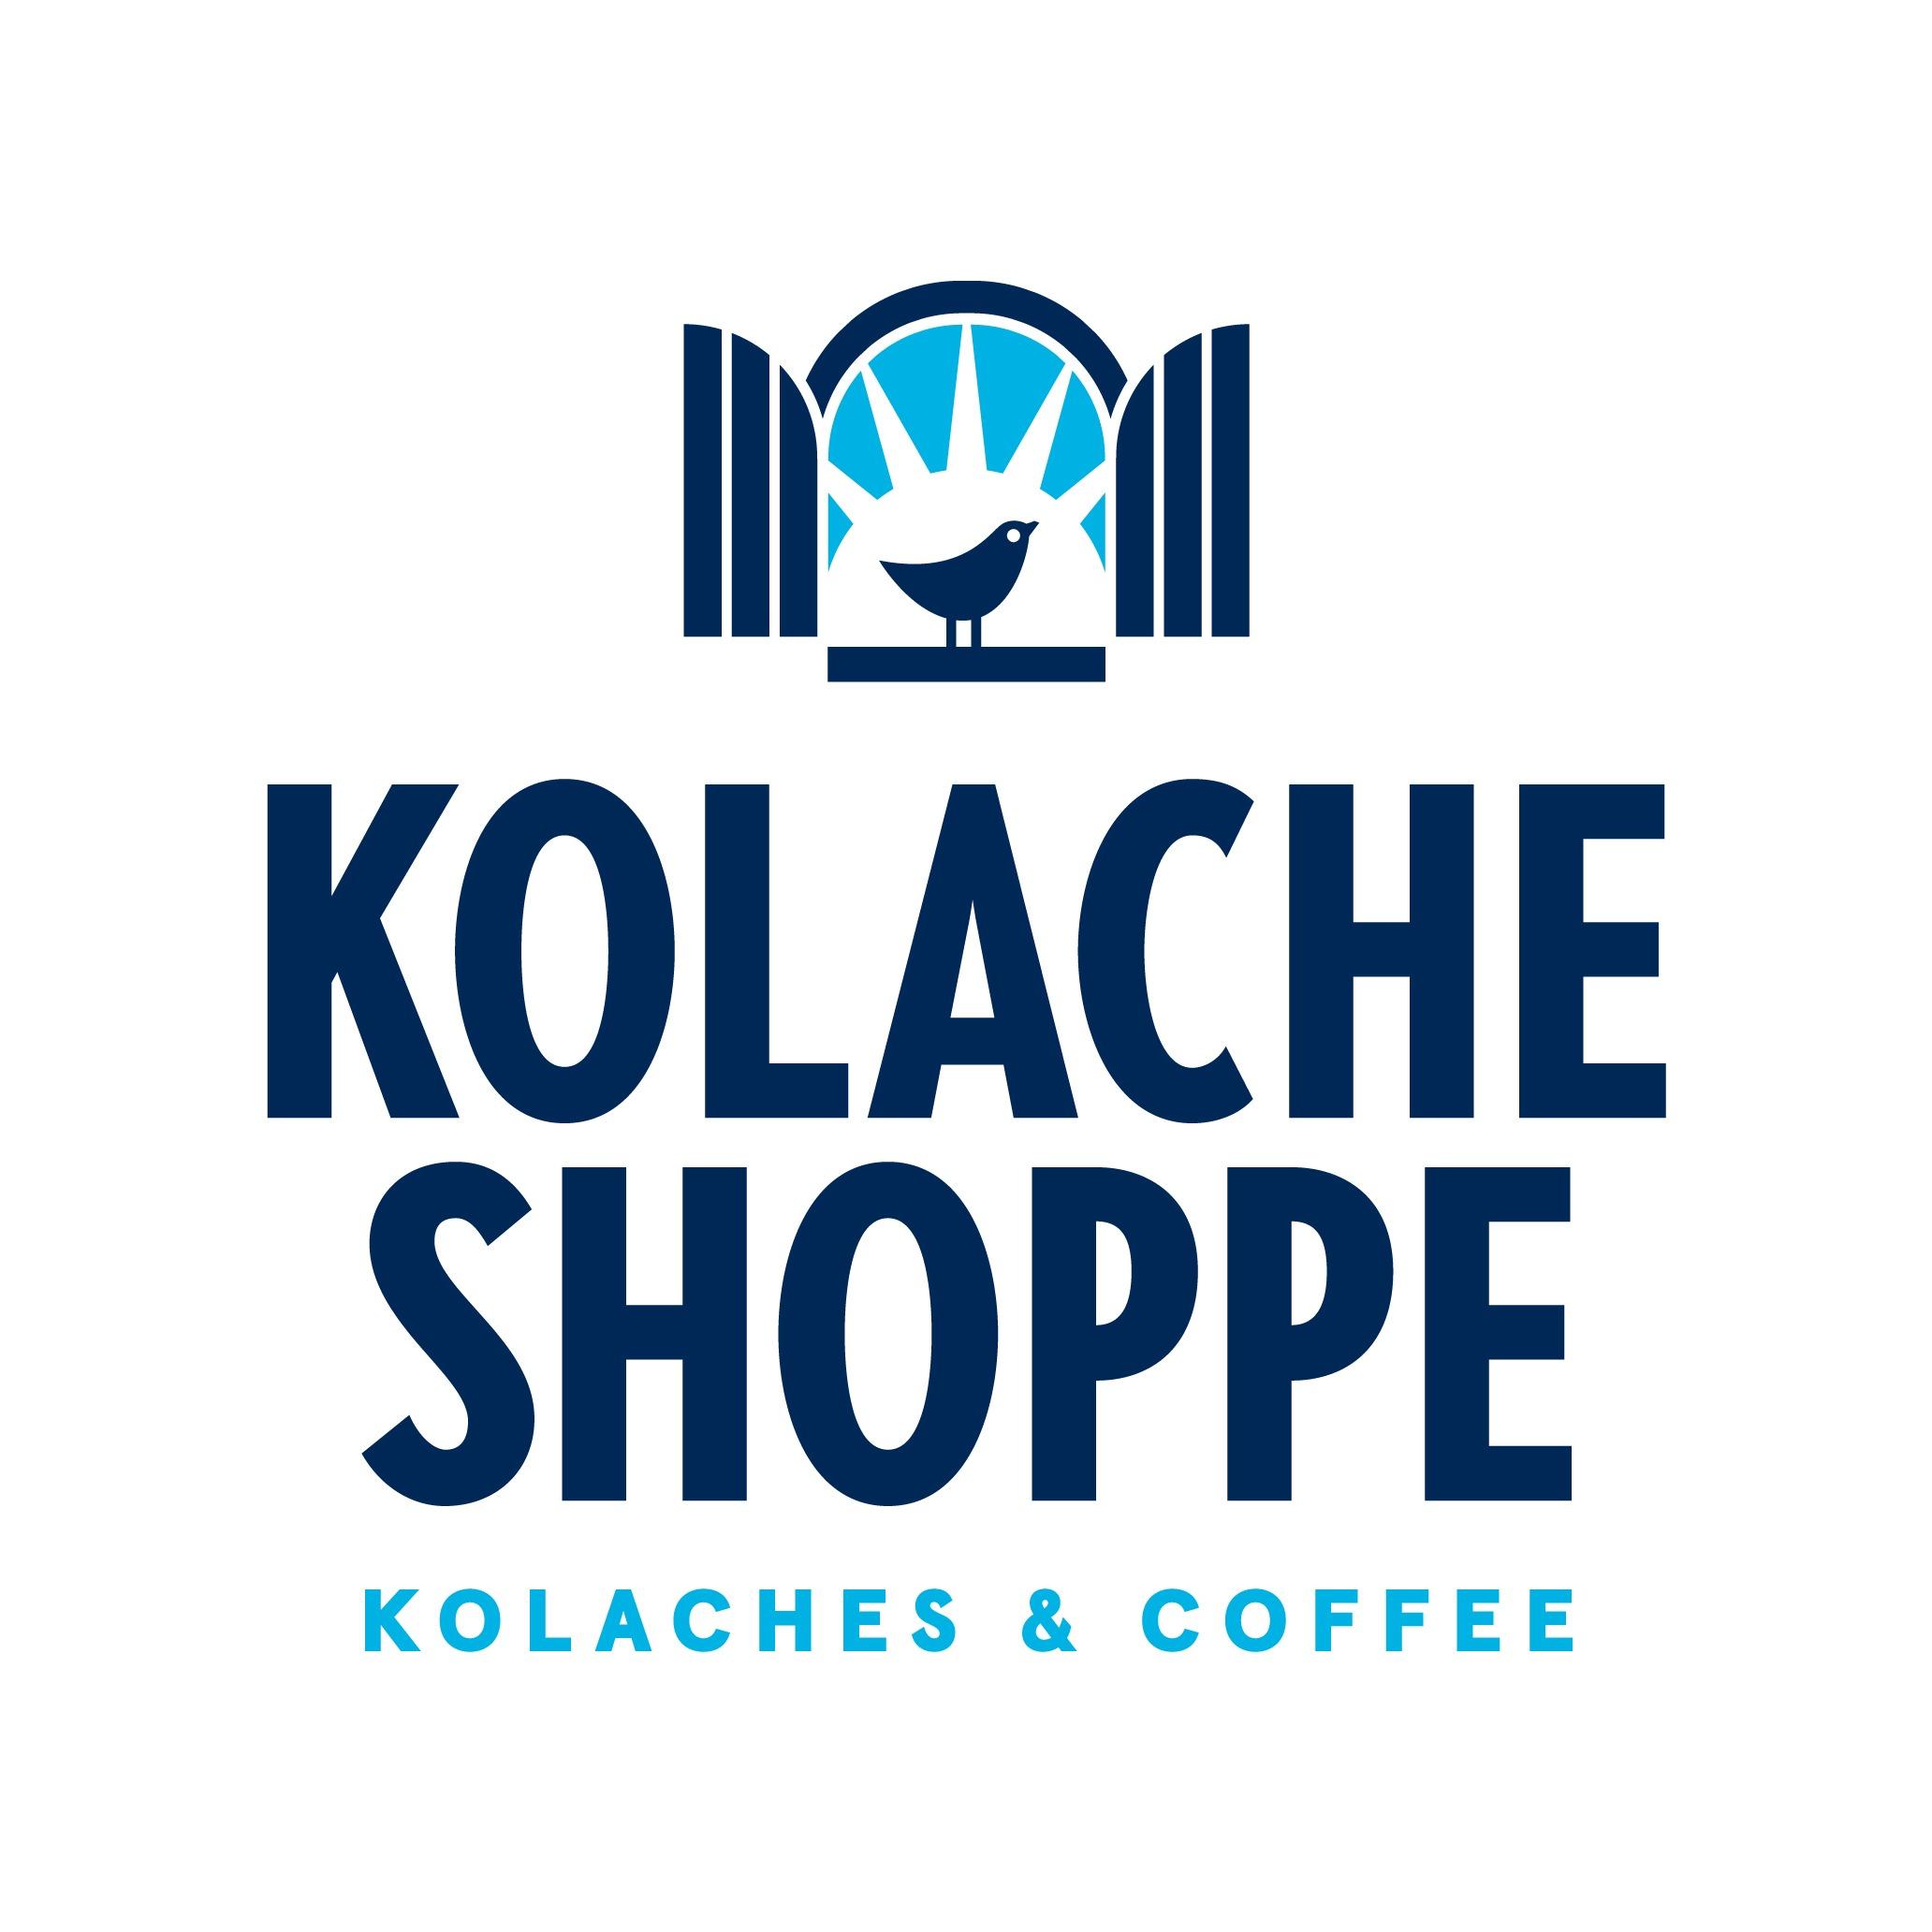 Kolache Shoppe - Heights - Houston, TX 77008 - (281)846-6499 | ShowMeLocal.com